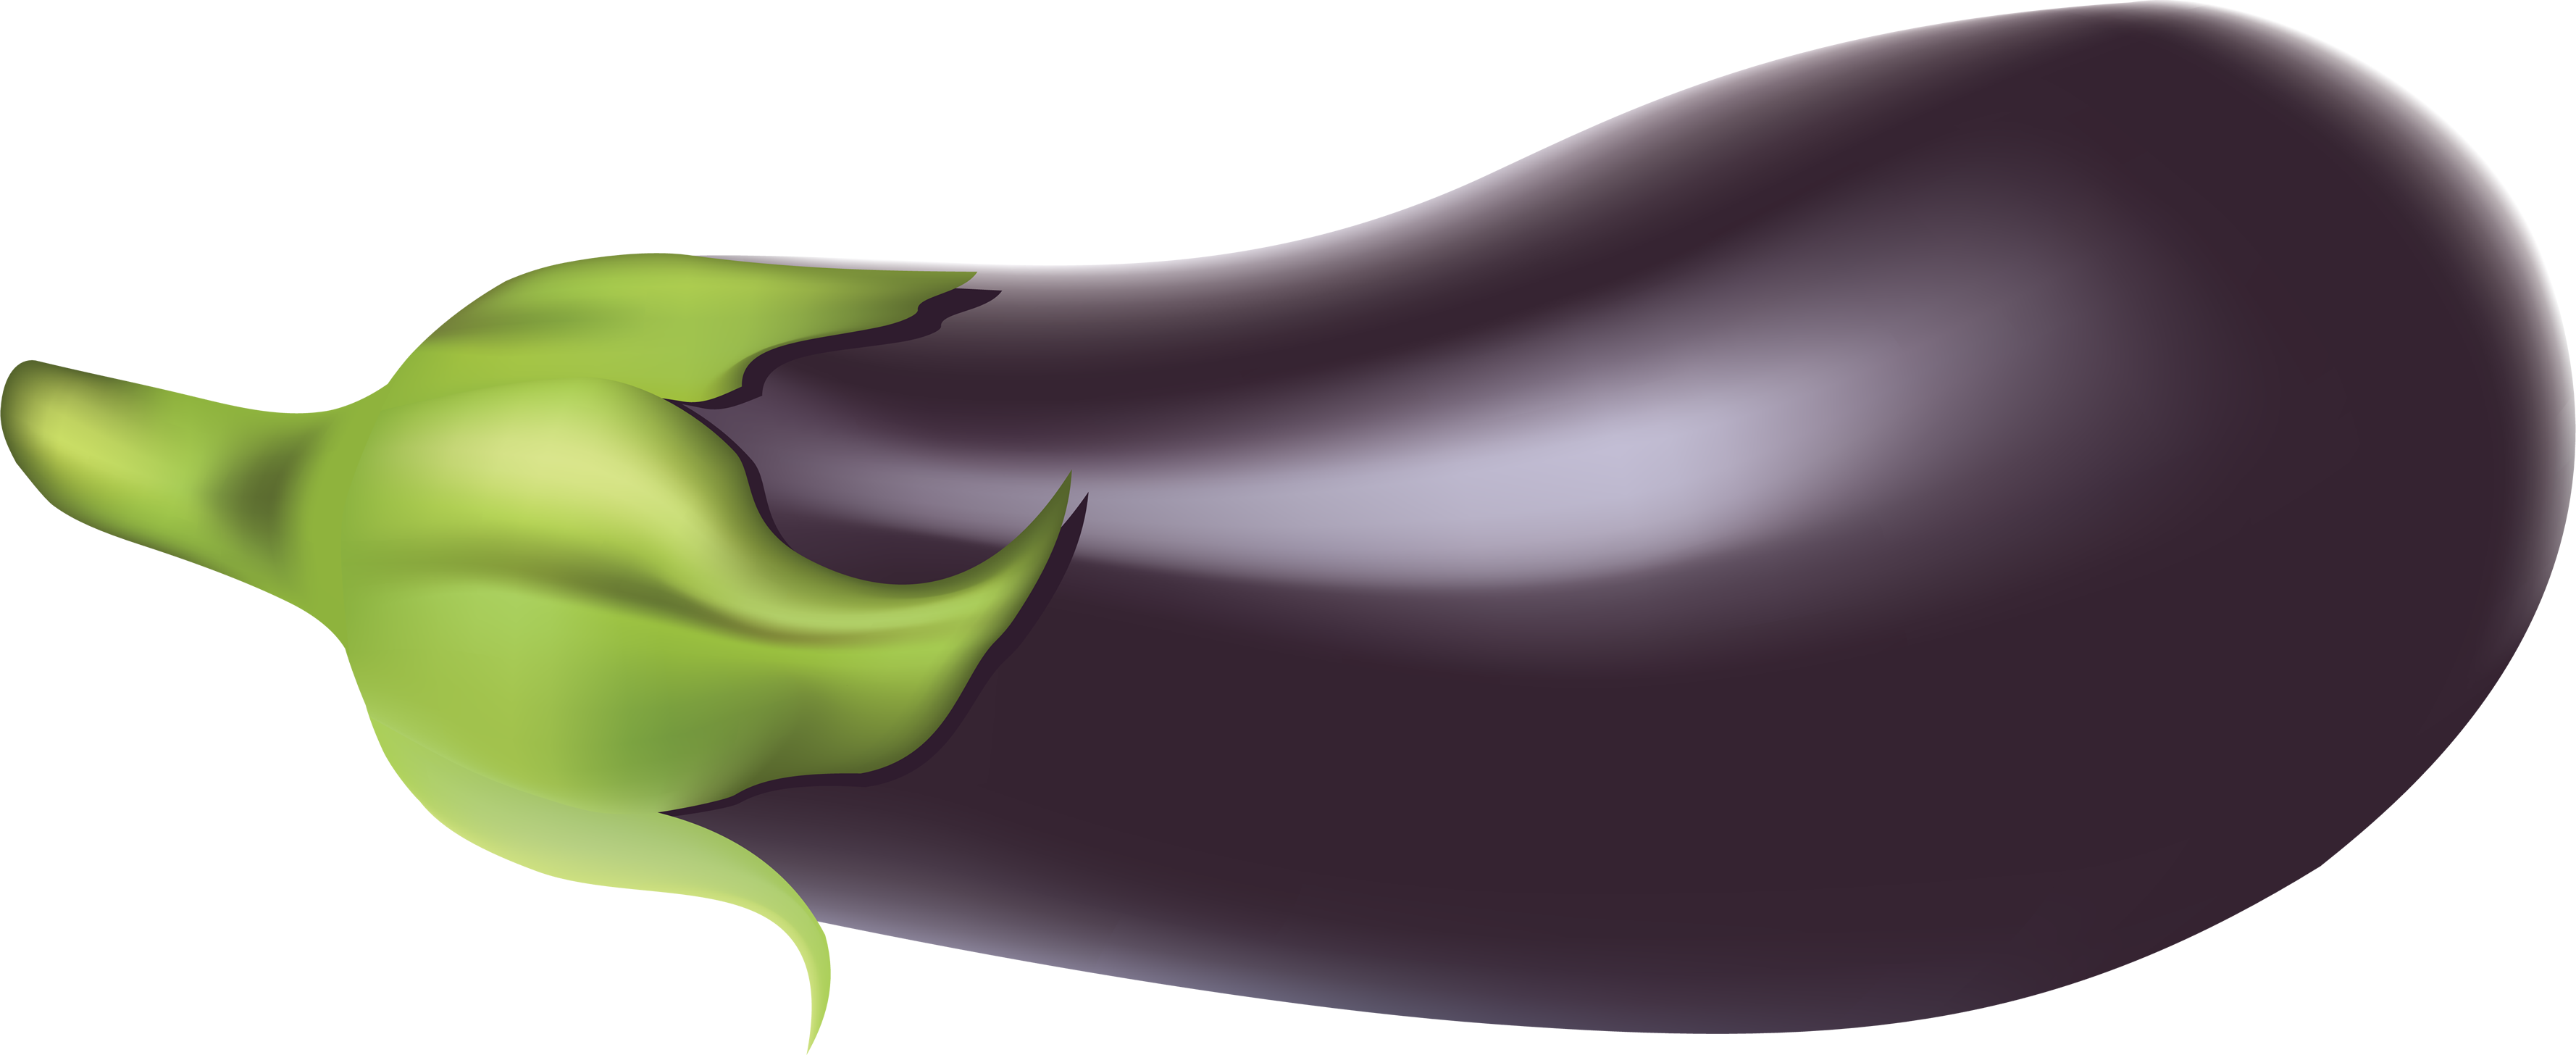 Eggplant clipart single.